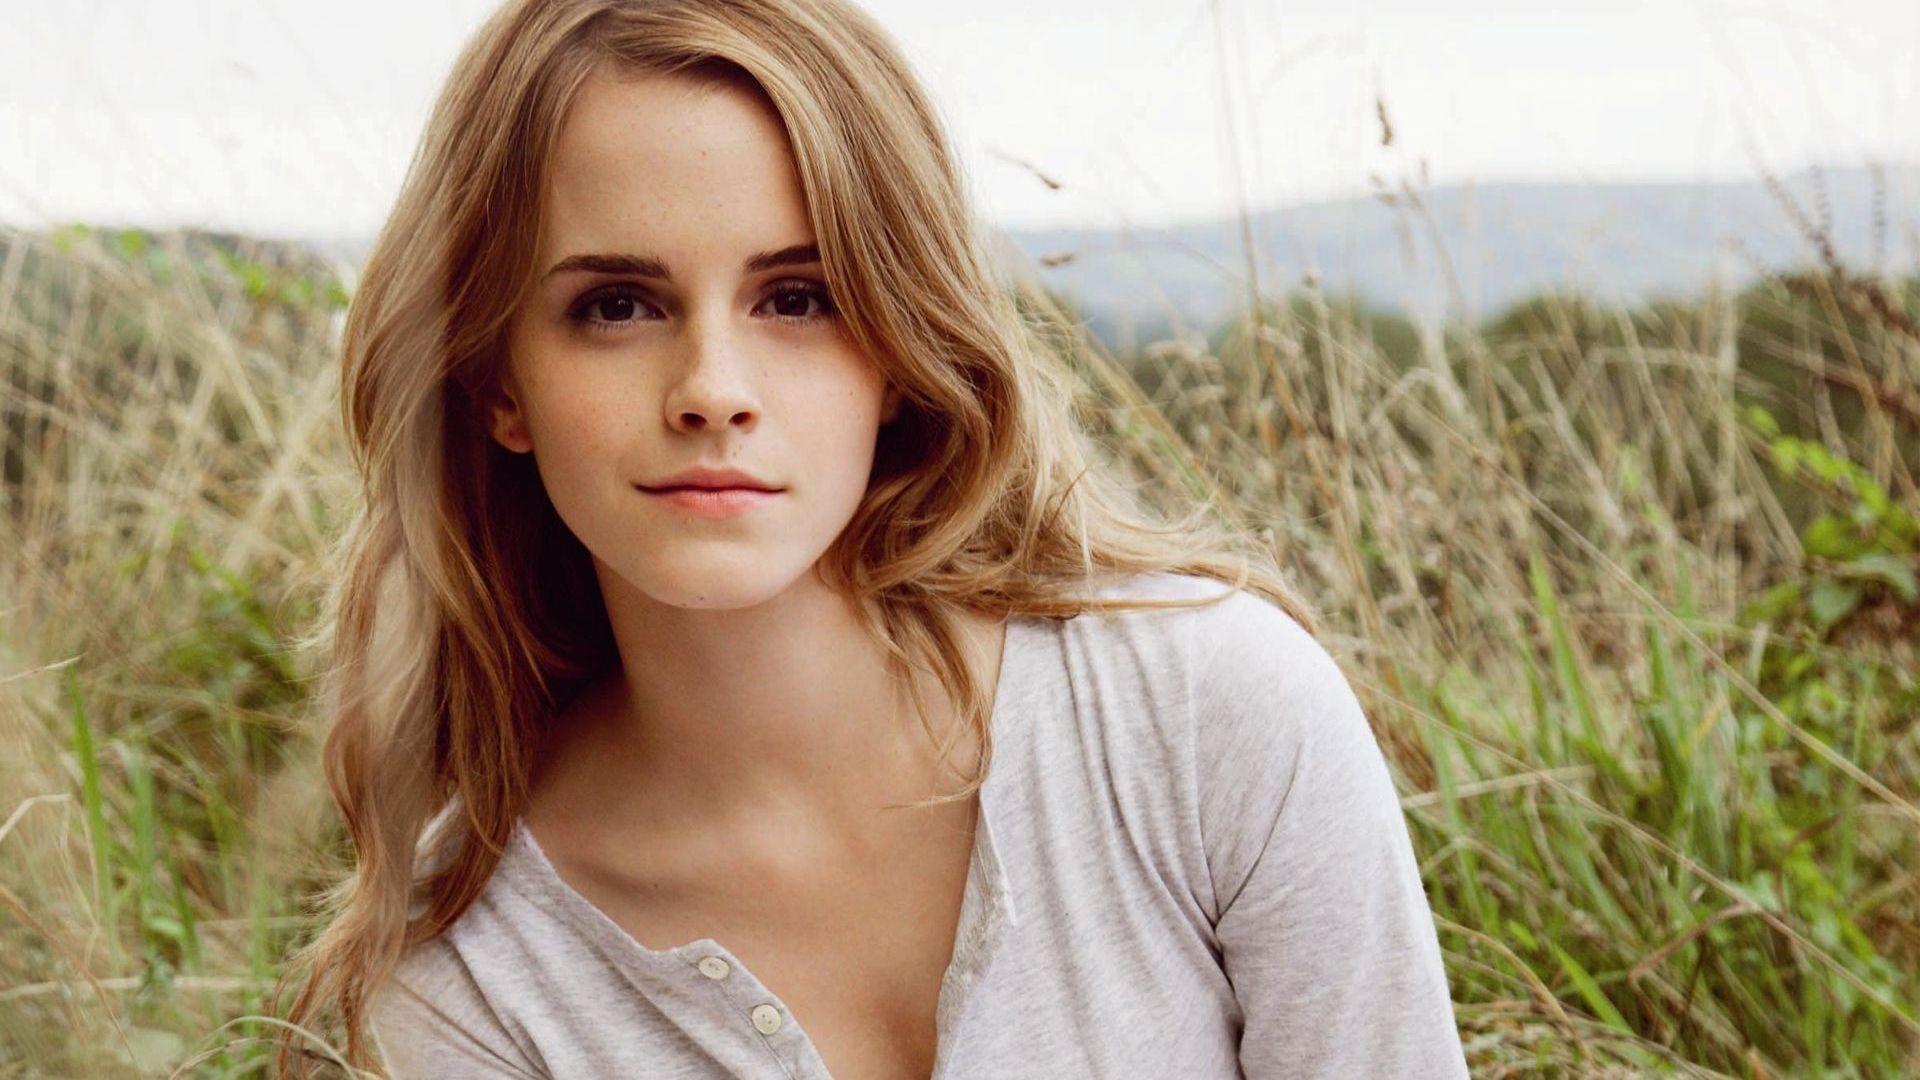 Emma Watson Wide Full HD 1080p Image Photo Pics Wallpaper